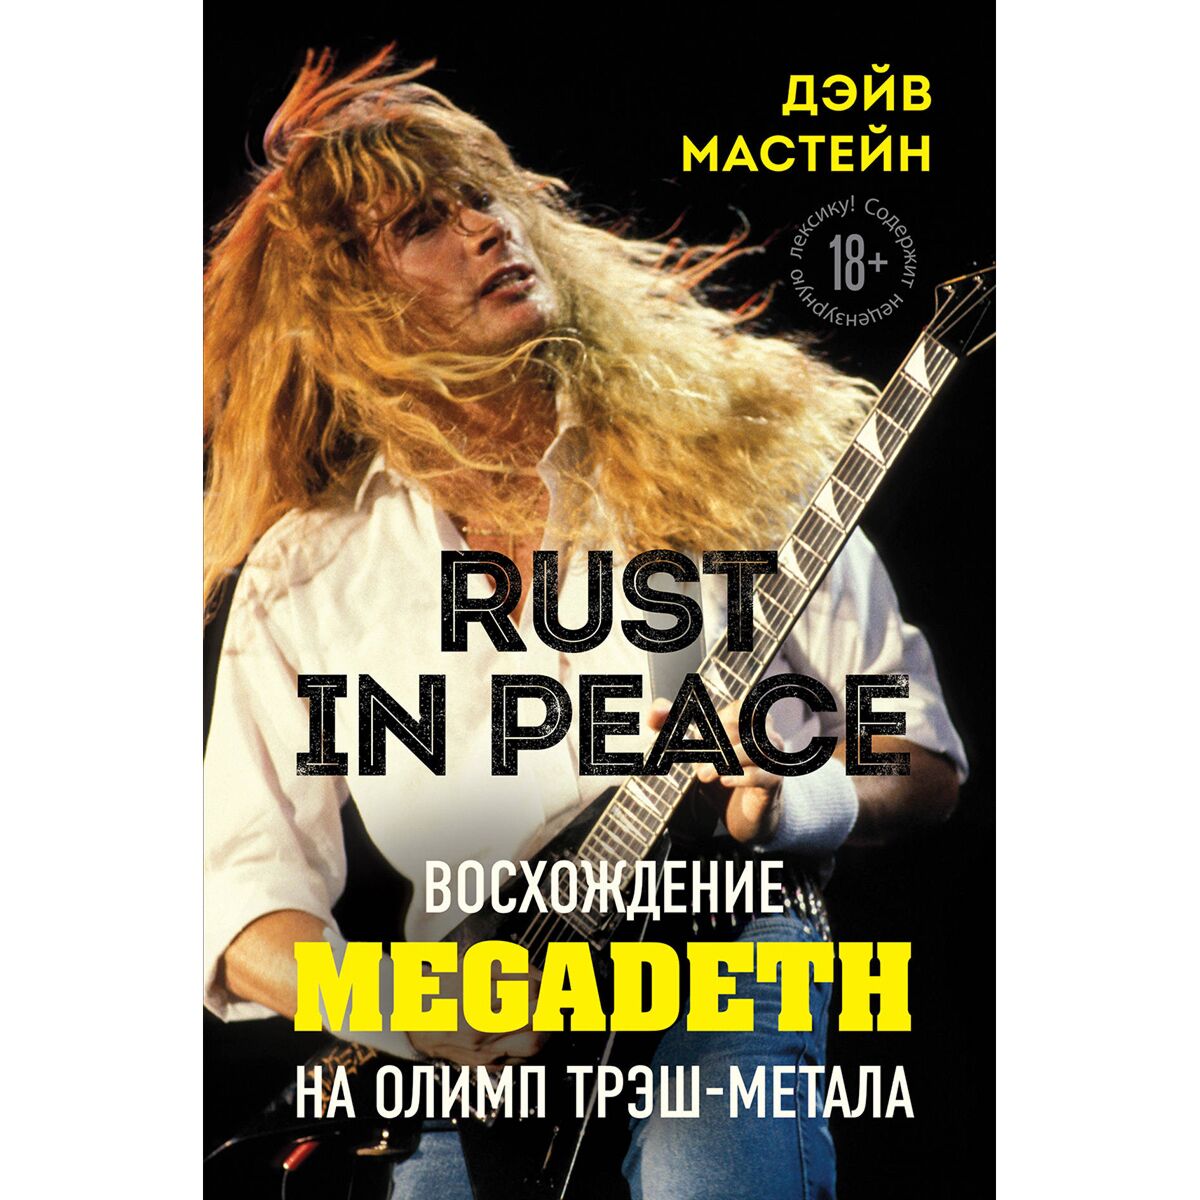 Rust in peace megadeth отзывы фото 44